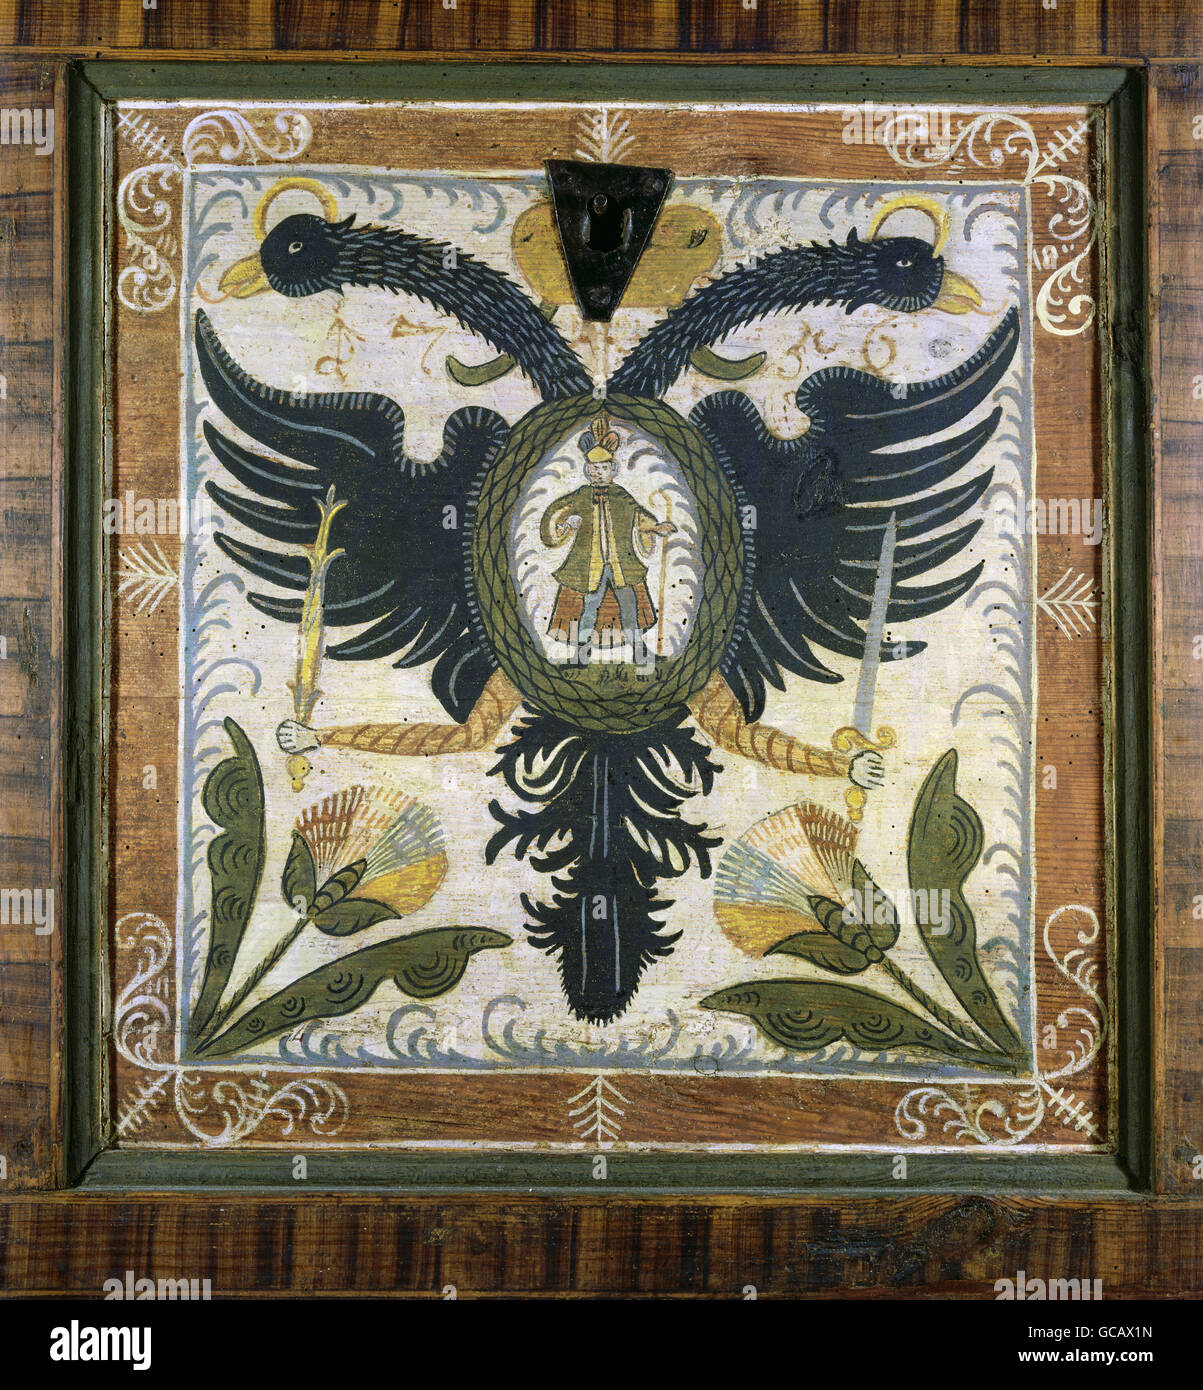 fine arts, Alpine folk art, painting on wood, double-headed eagle, rural wardrobe, Tyrol, early 19th century, Stock Photo